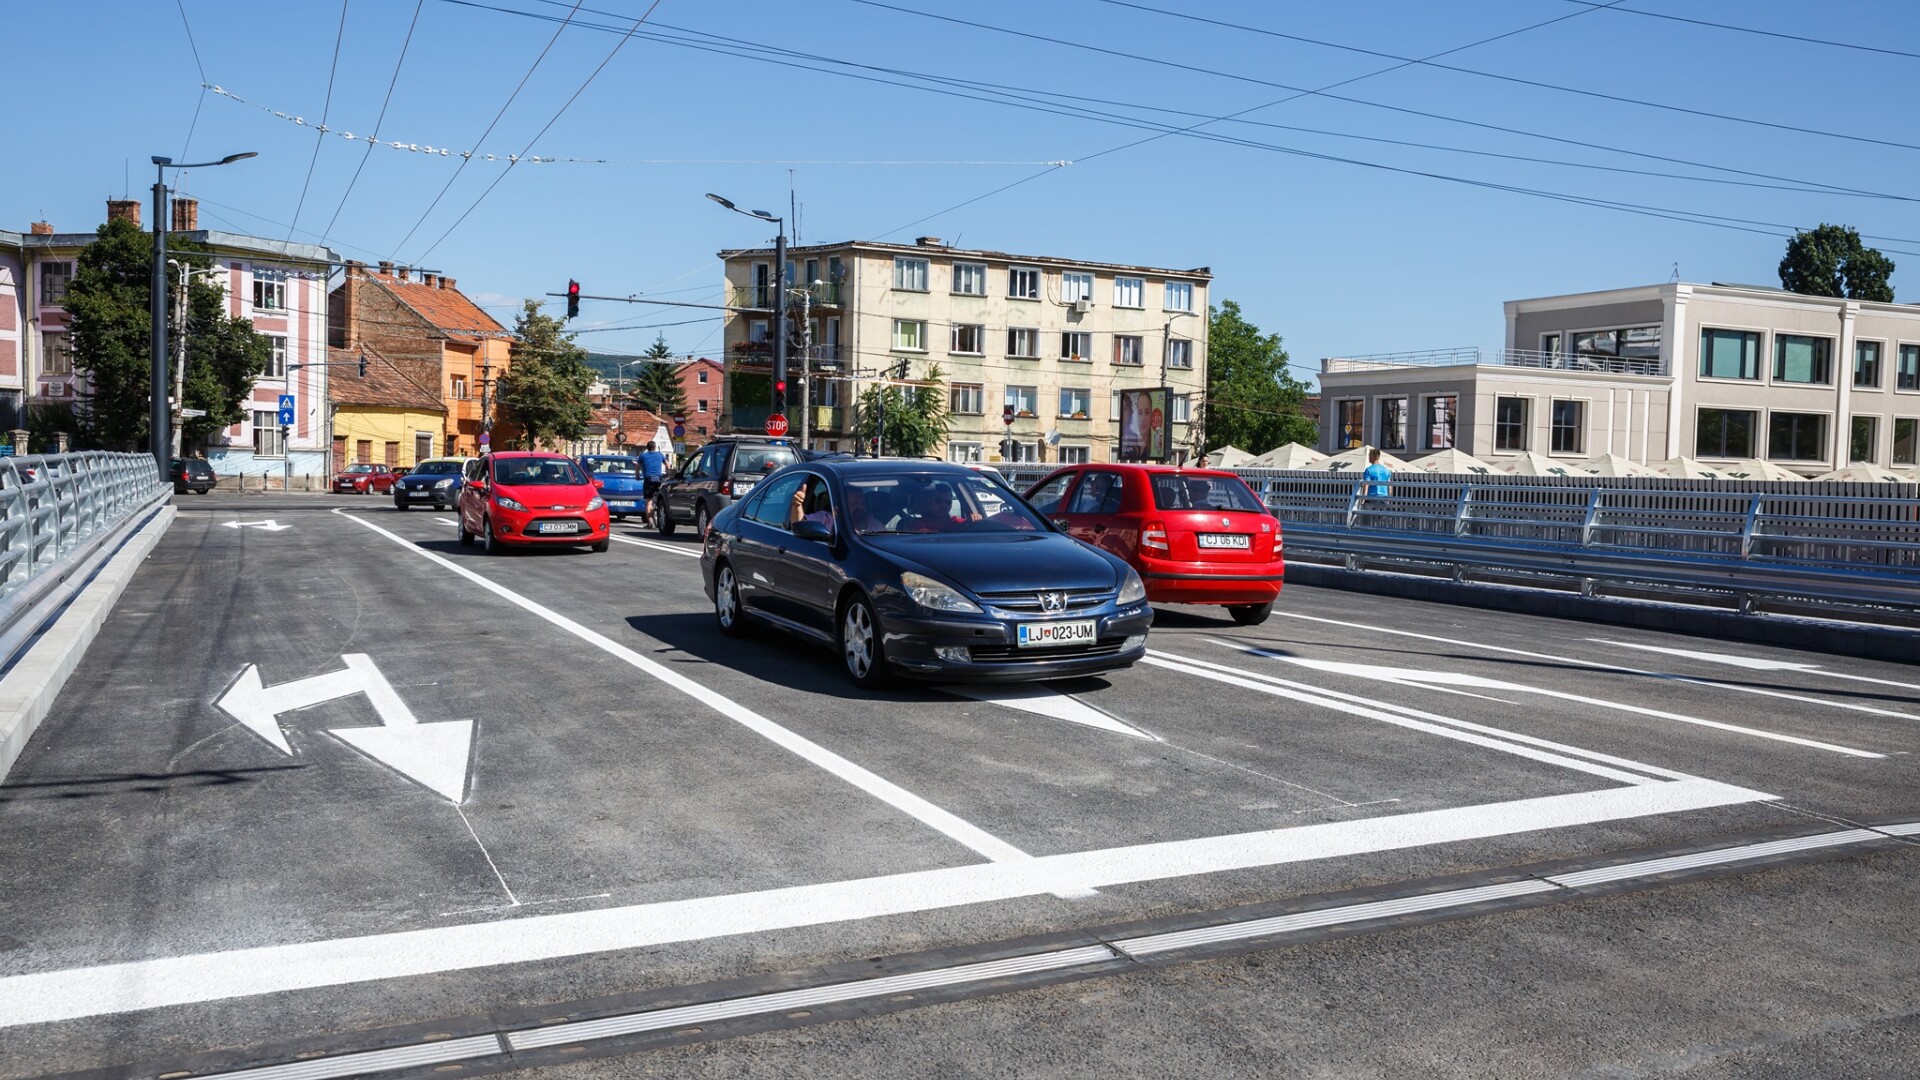 S-a deschis Podul Traian din Cluj-Napoca dupa aproape un an de zile